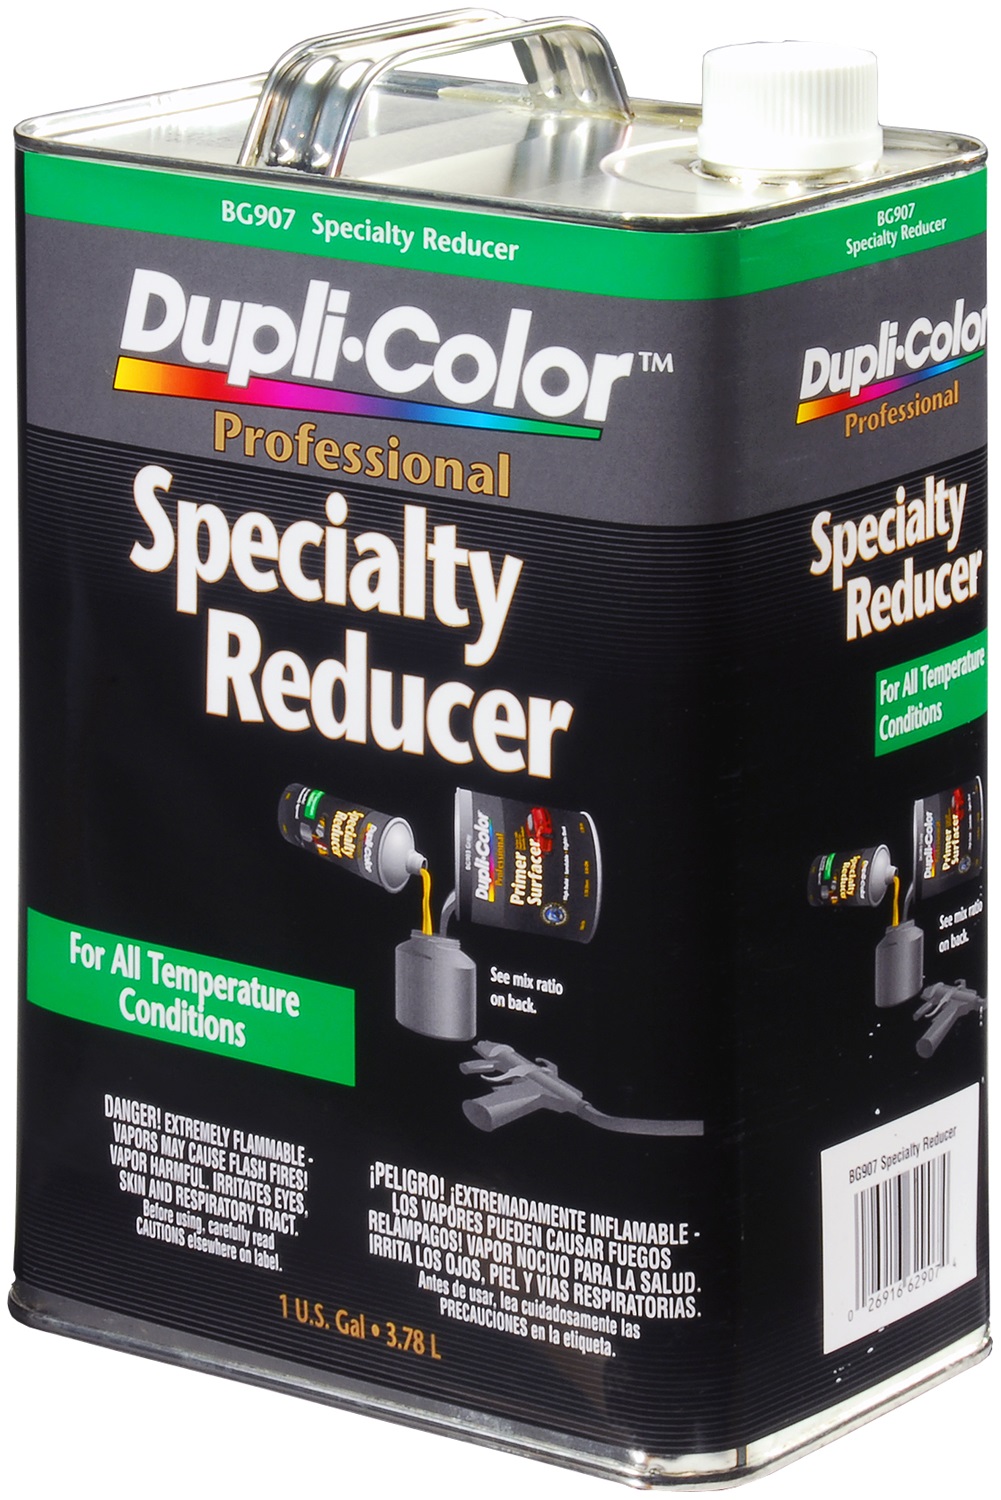 Dupli-Color Paint Dupli-Color Paint BG907 Dupli-Color Specialty Reducer